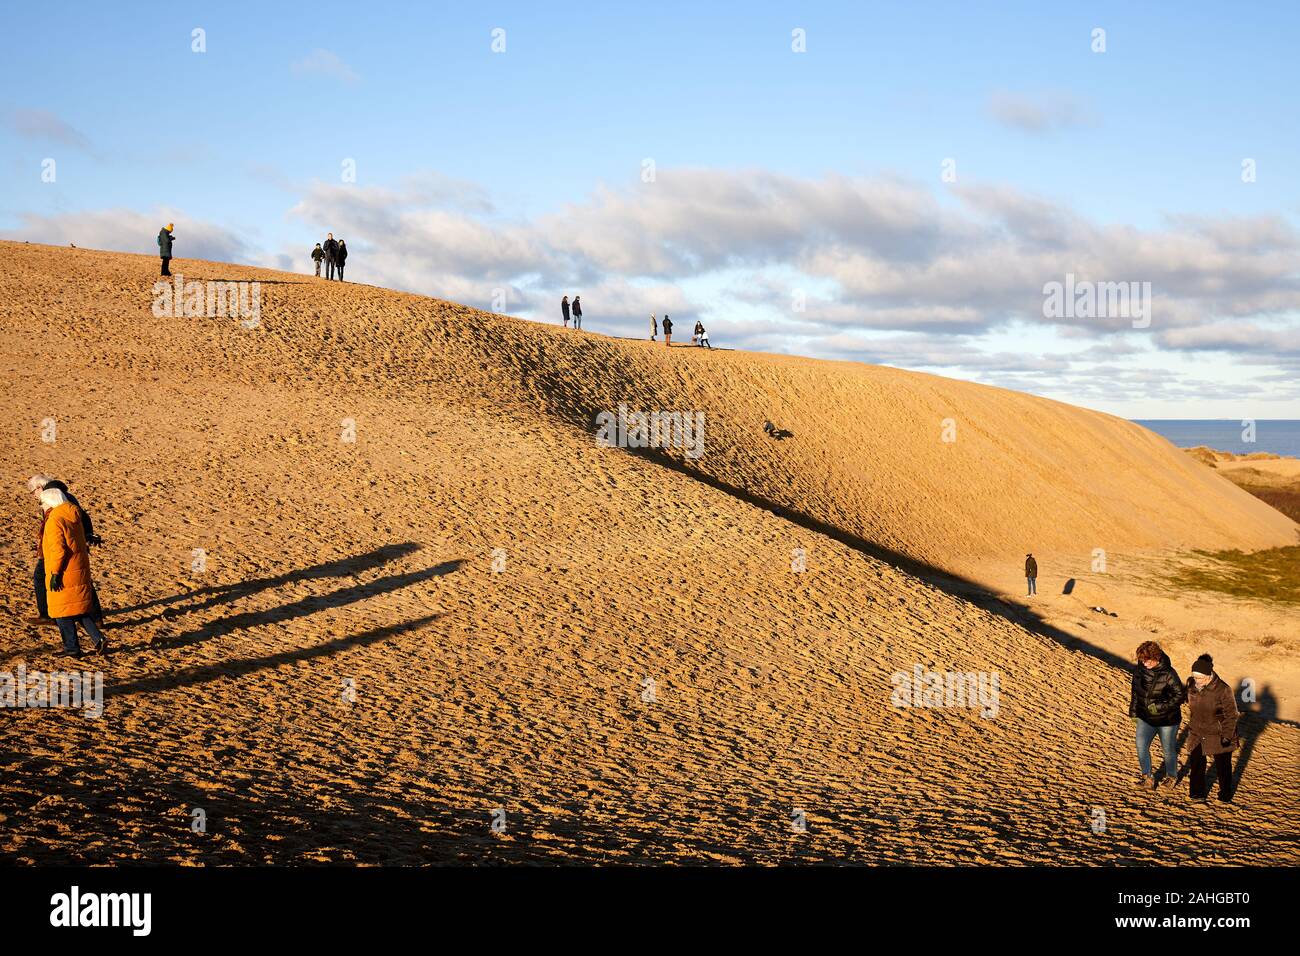 People walking in the sand dunes by Rubjerg Knude Lighthouse (Rubjerg Knude Fyr); Denmark Stock Photo